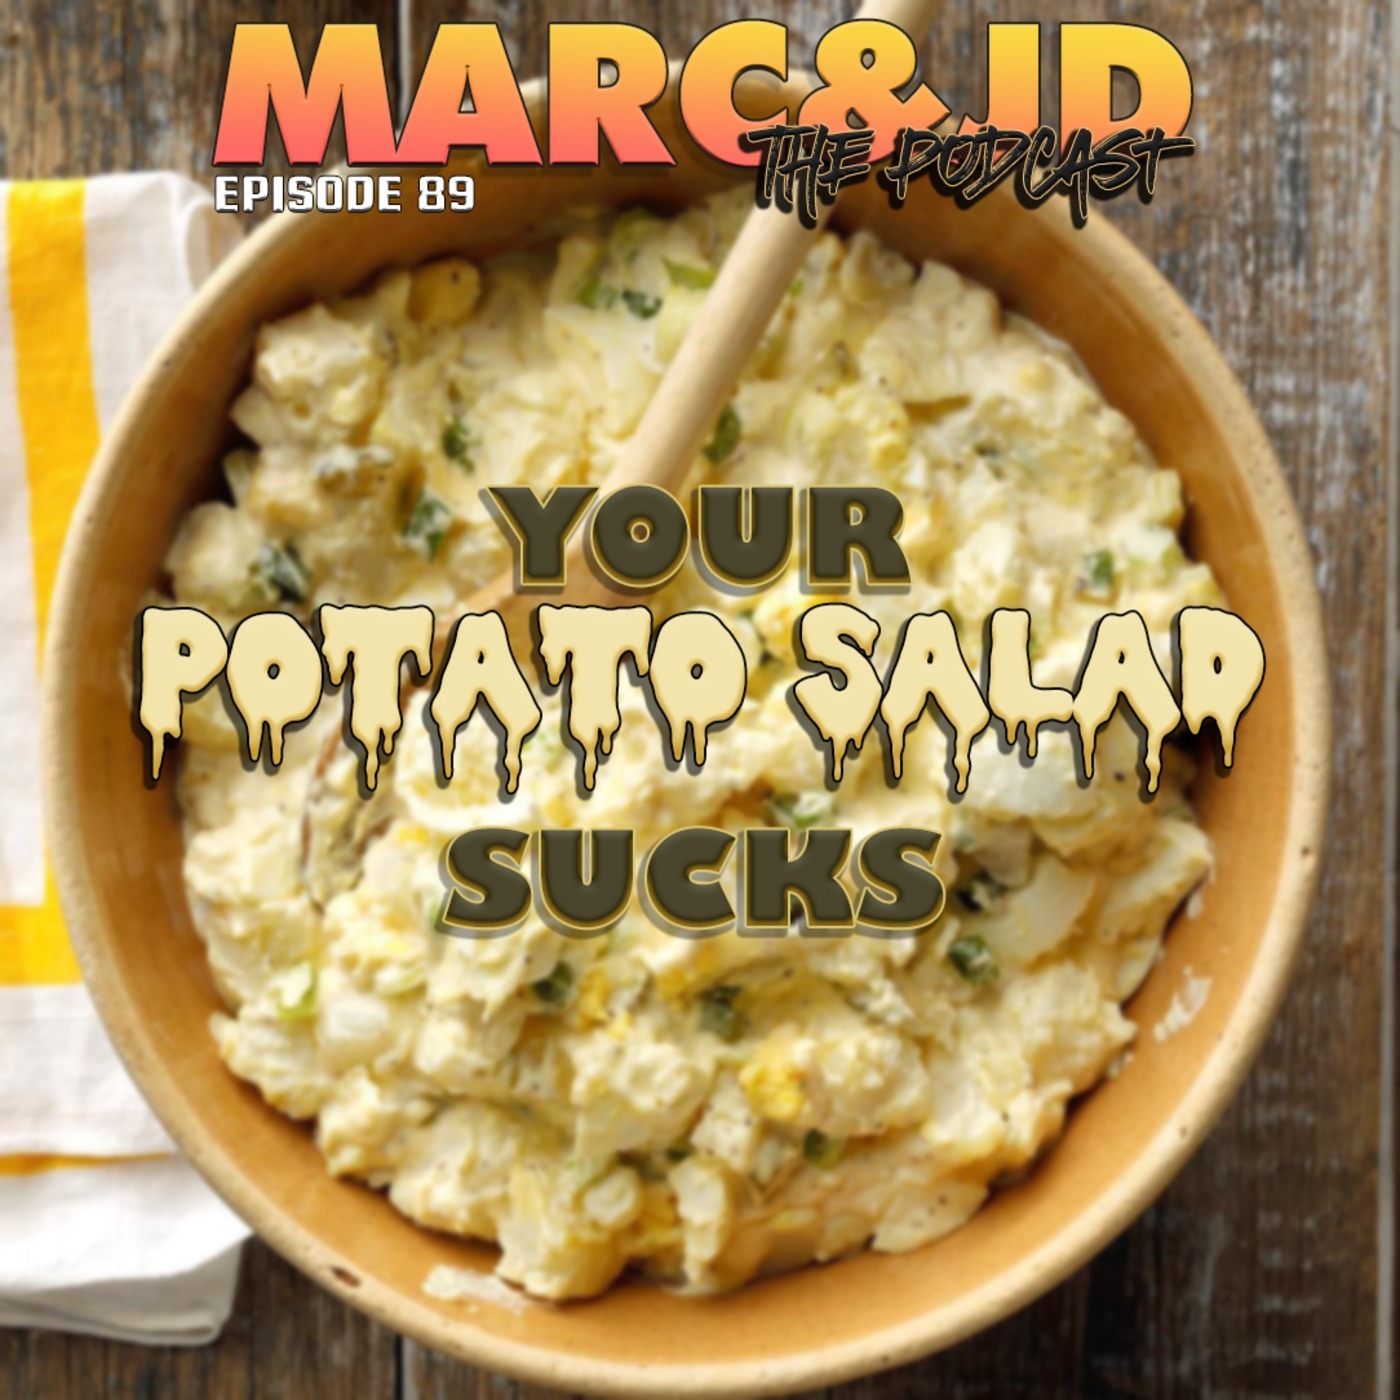 Your Potato Salad Sucks